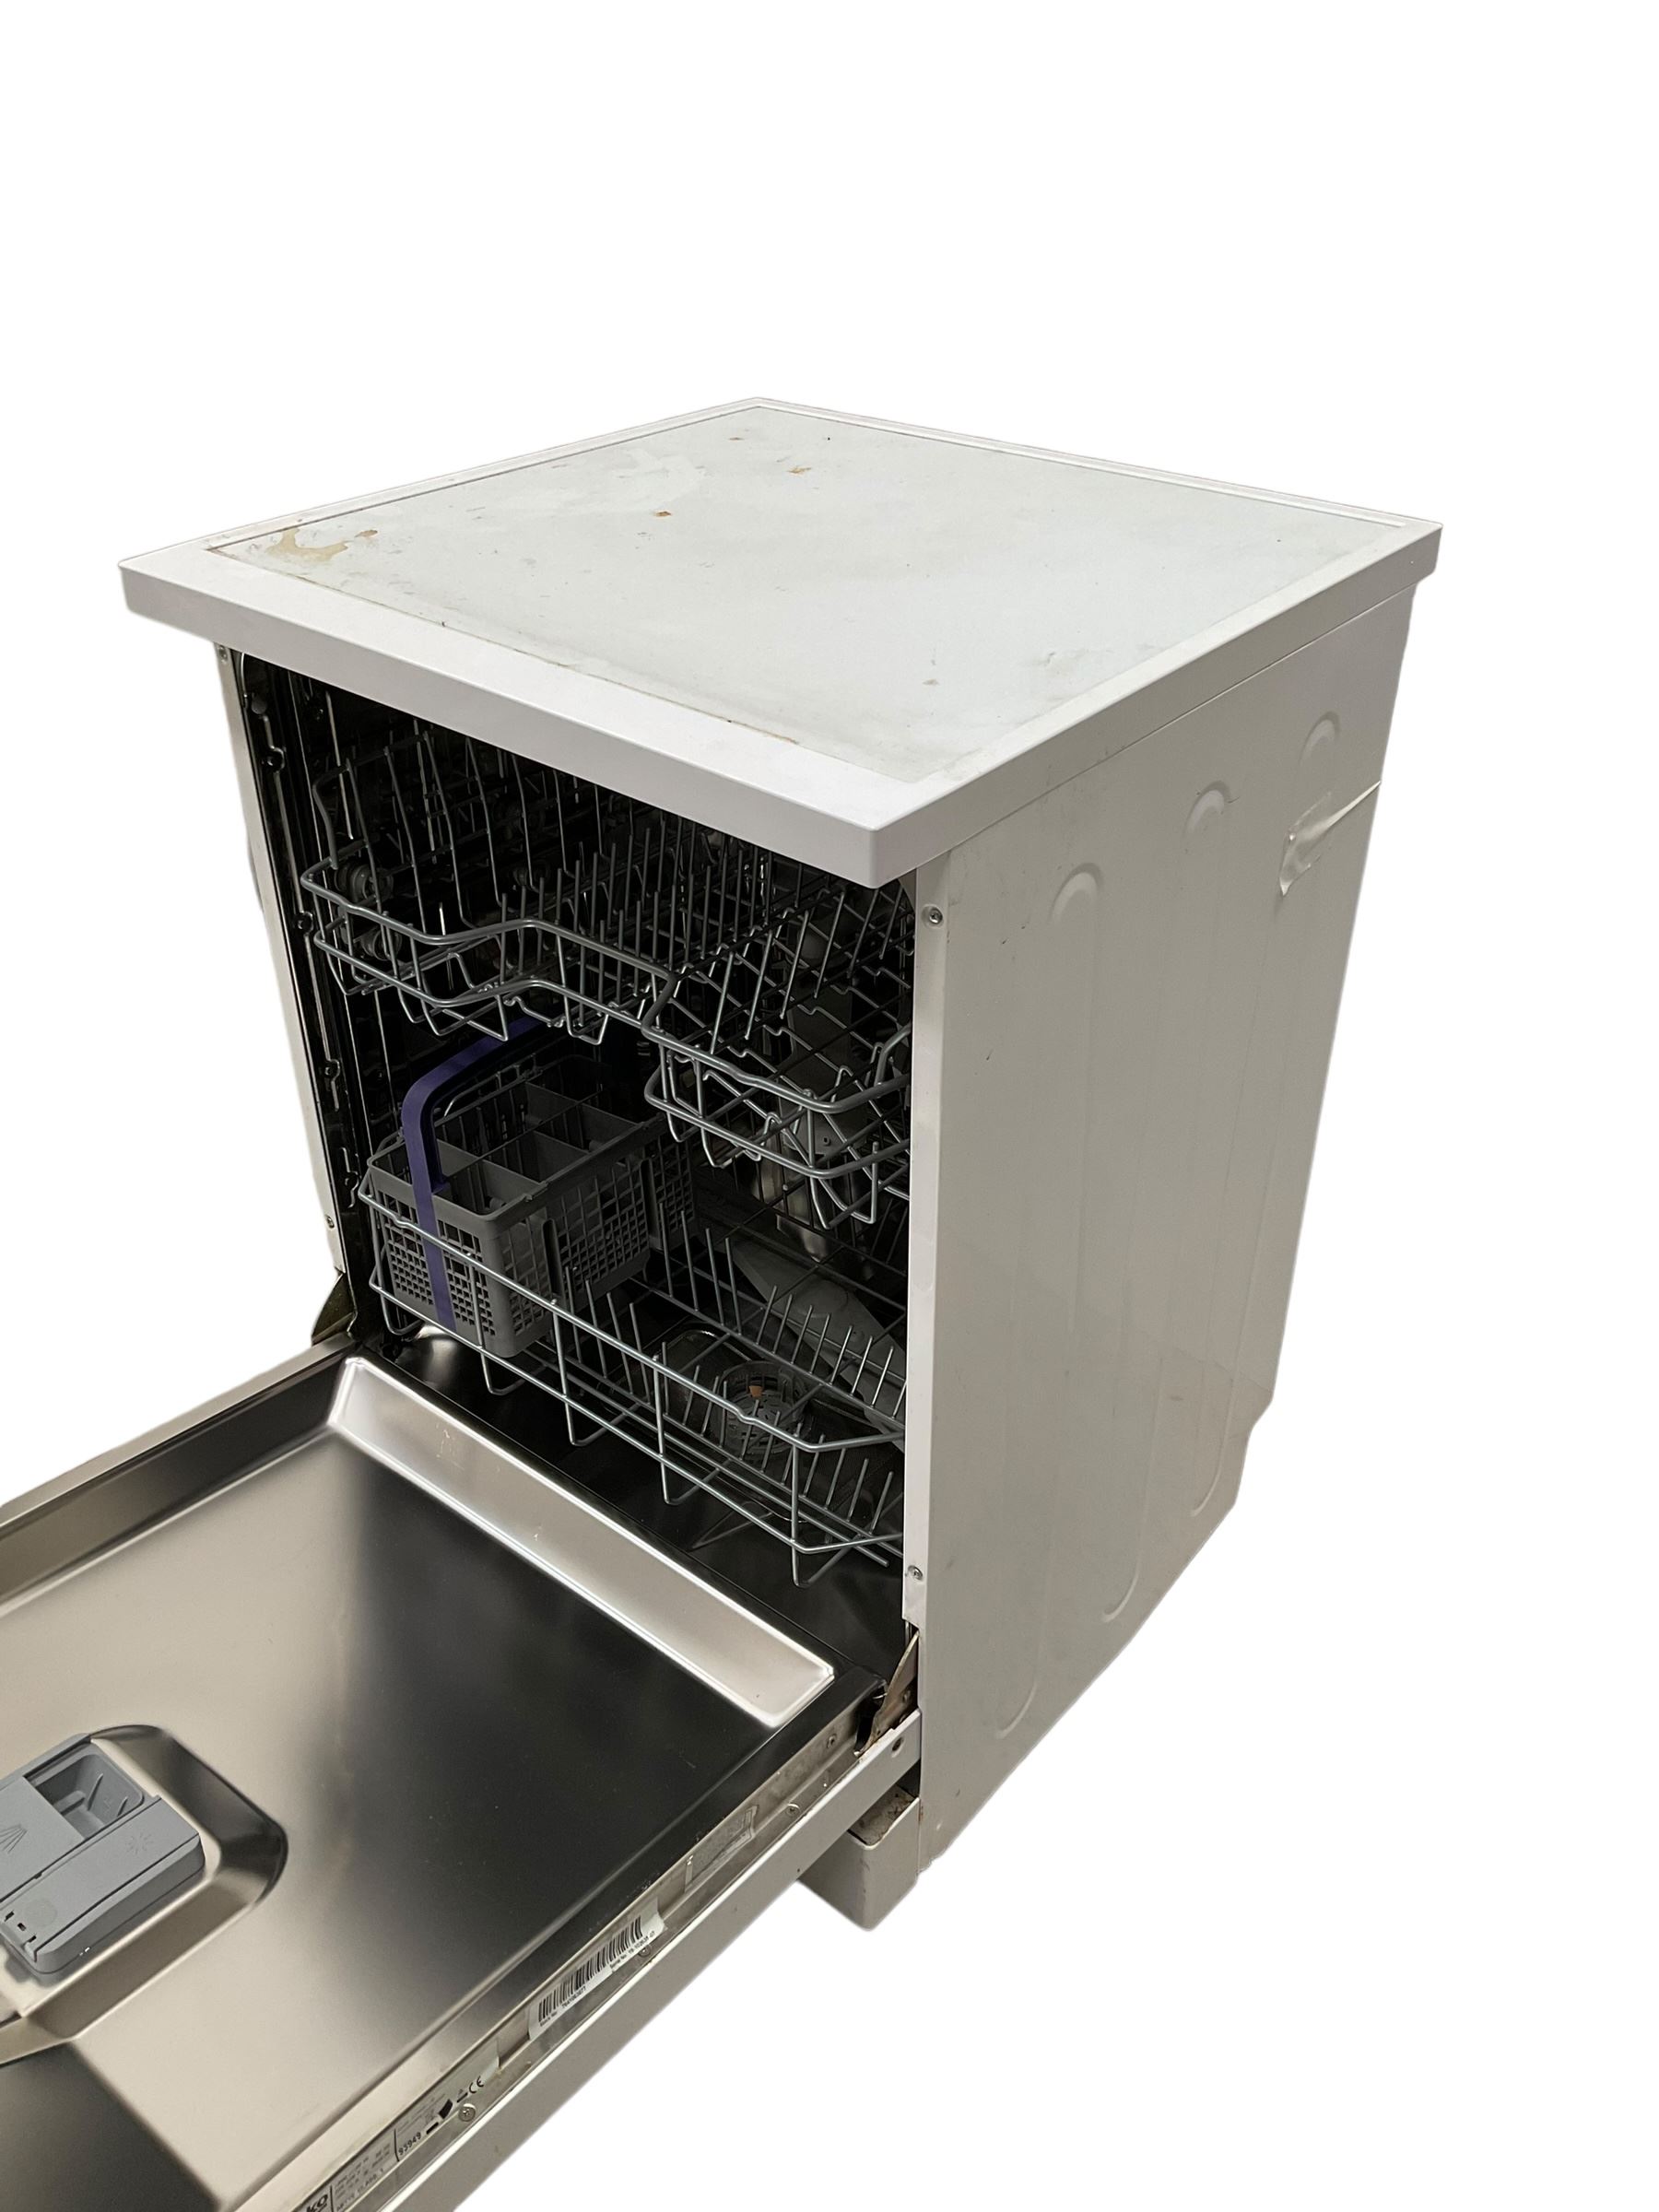 Beko Eco dishwasher in white - Image 3 of 3